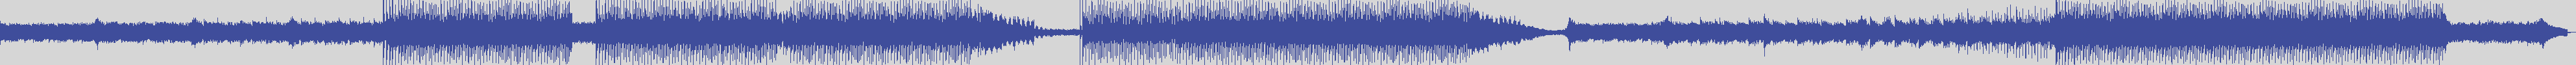 airplane_records [ARP1013] DB Boulevard - Frequency [Original Club Mix] audio wave form